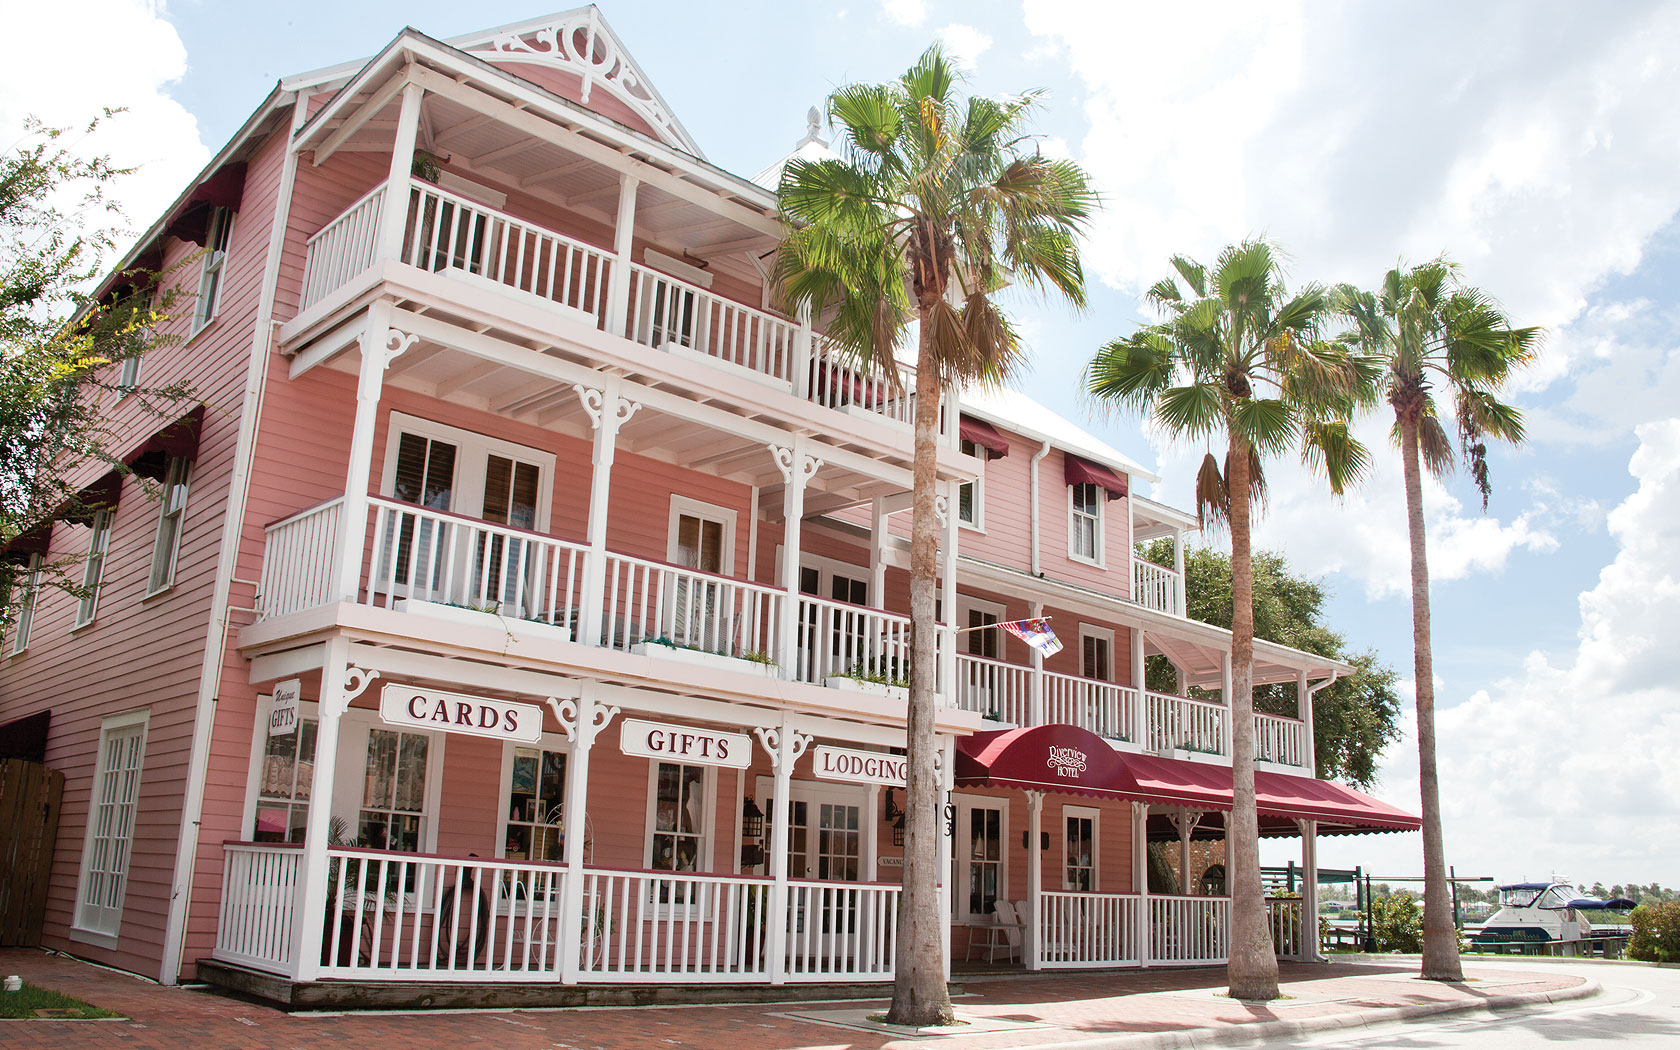 The Riverview Hotel & Spa in New Smyrna Beach, FL